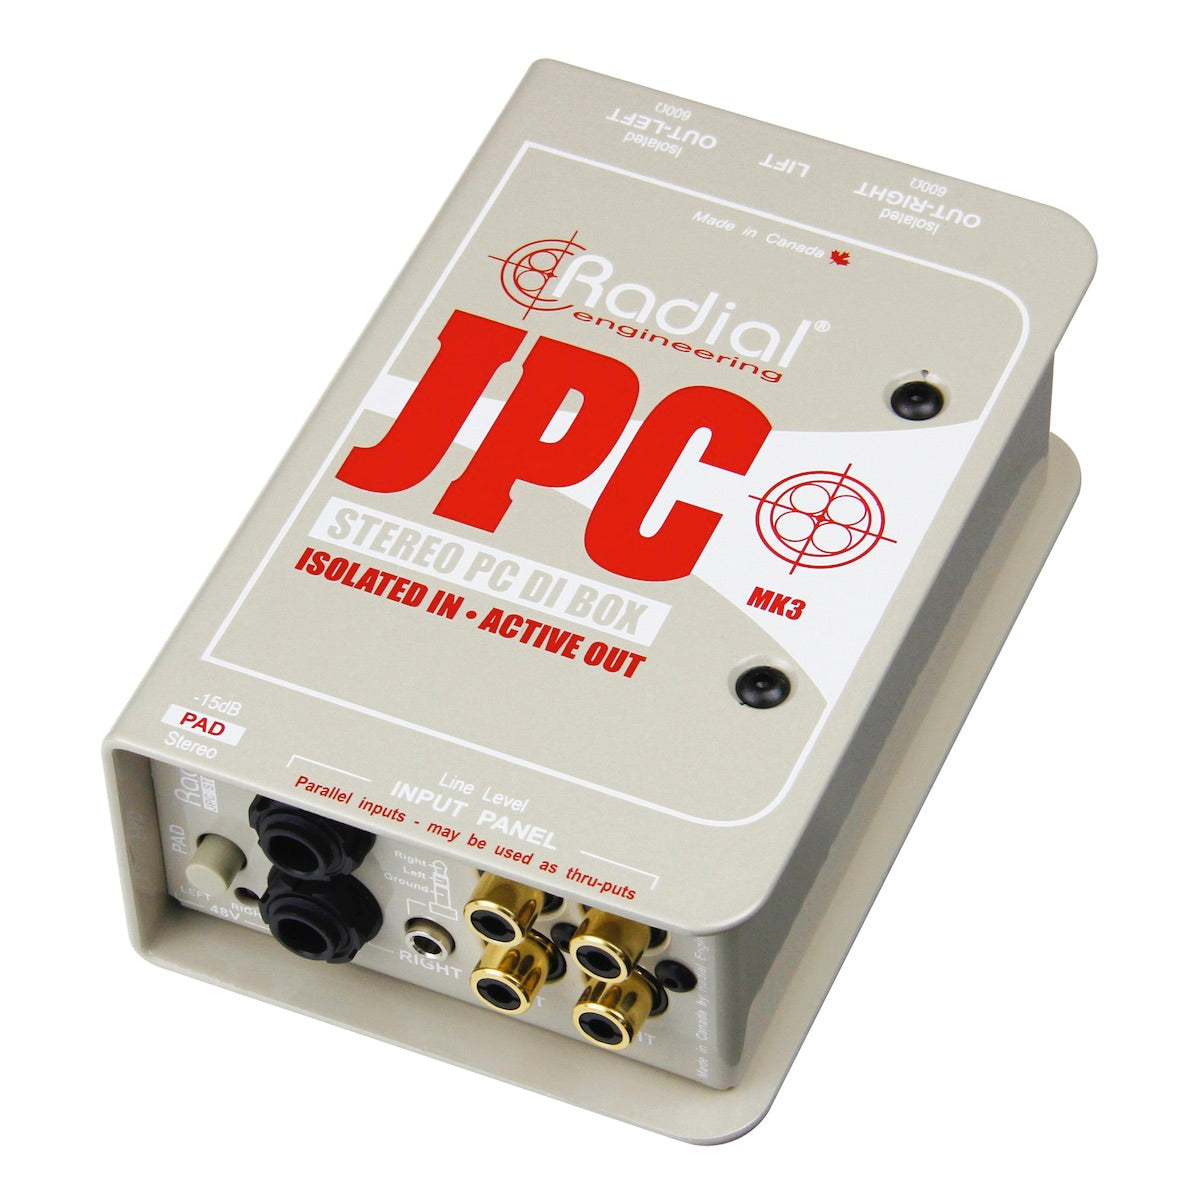 Radial JPC - Computer Direct Box, Analog Stereo Interface